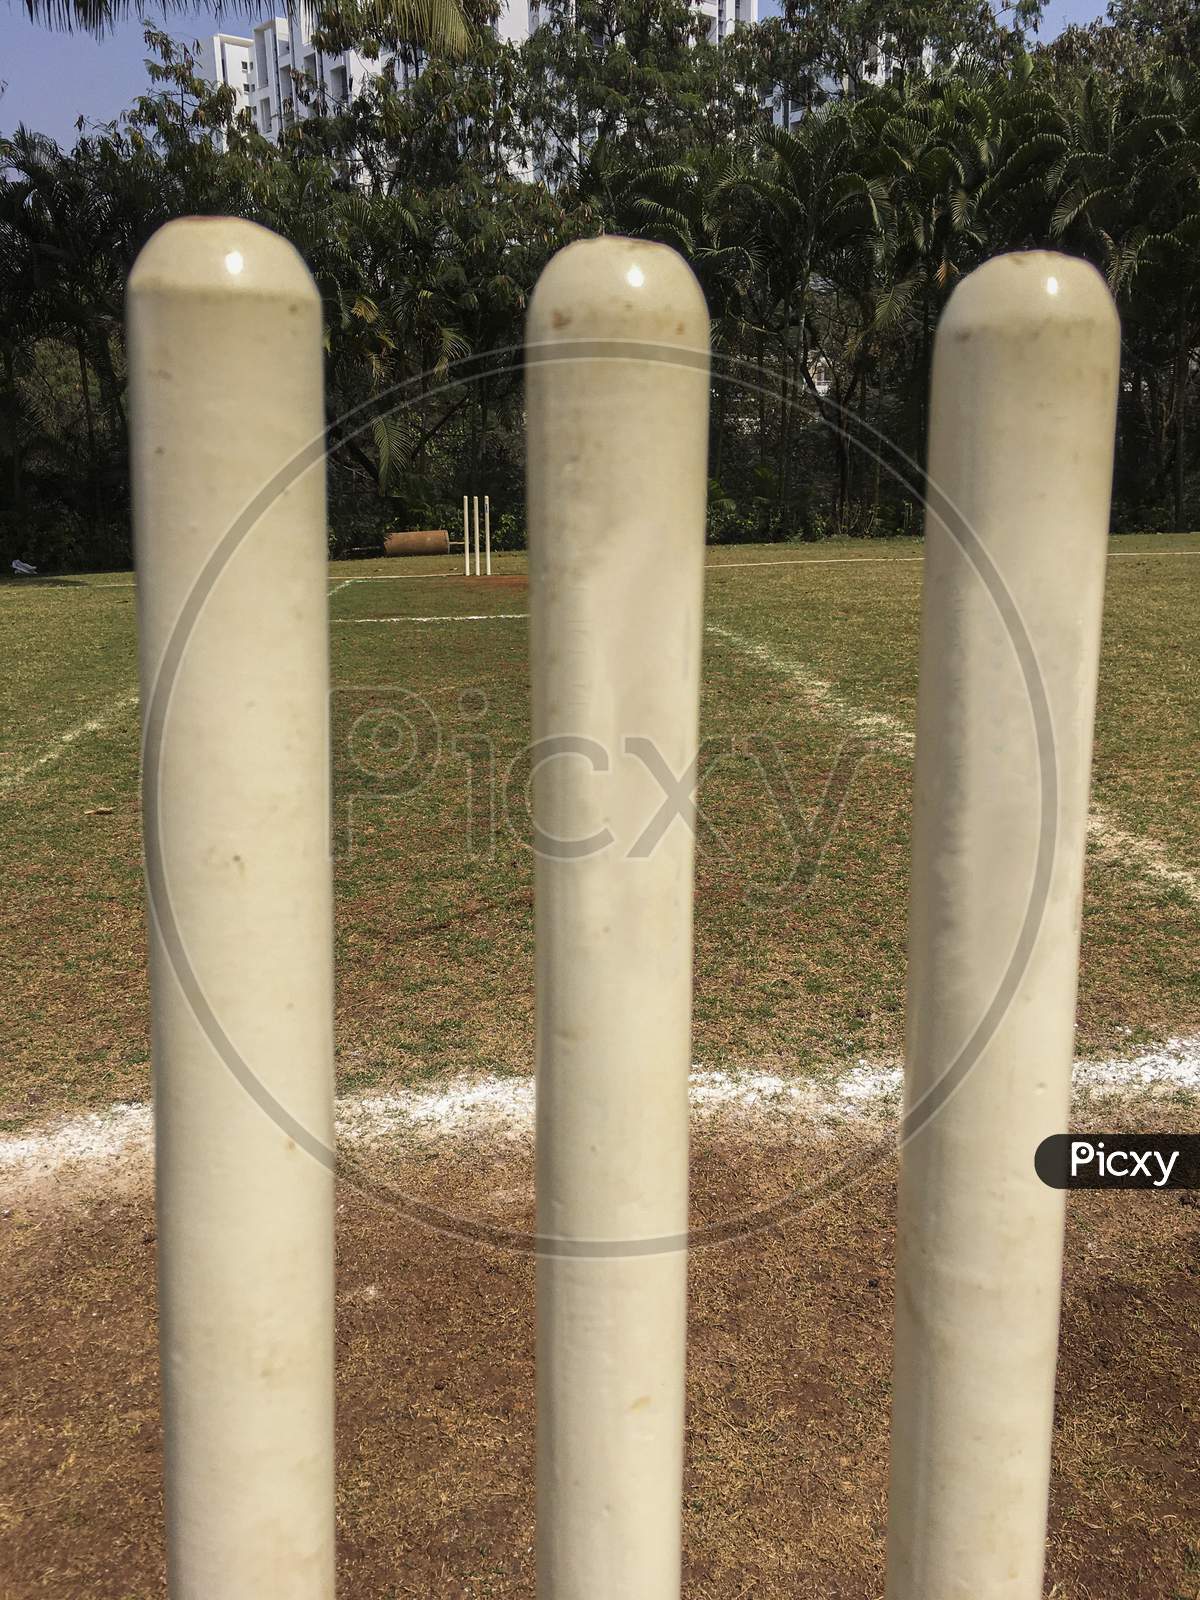 Cricket stumps close-up | Stumps to stumps view